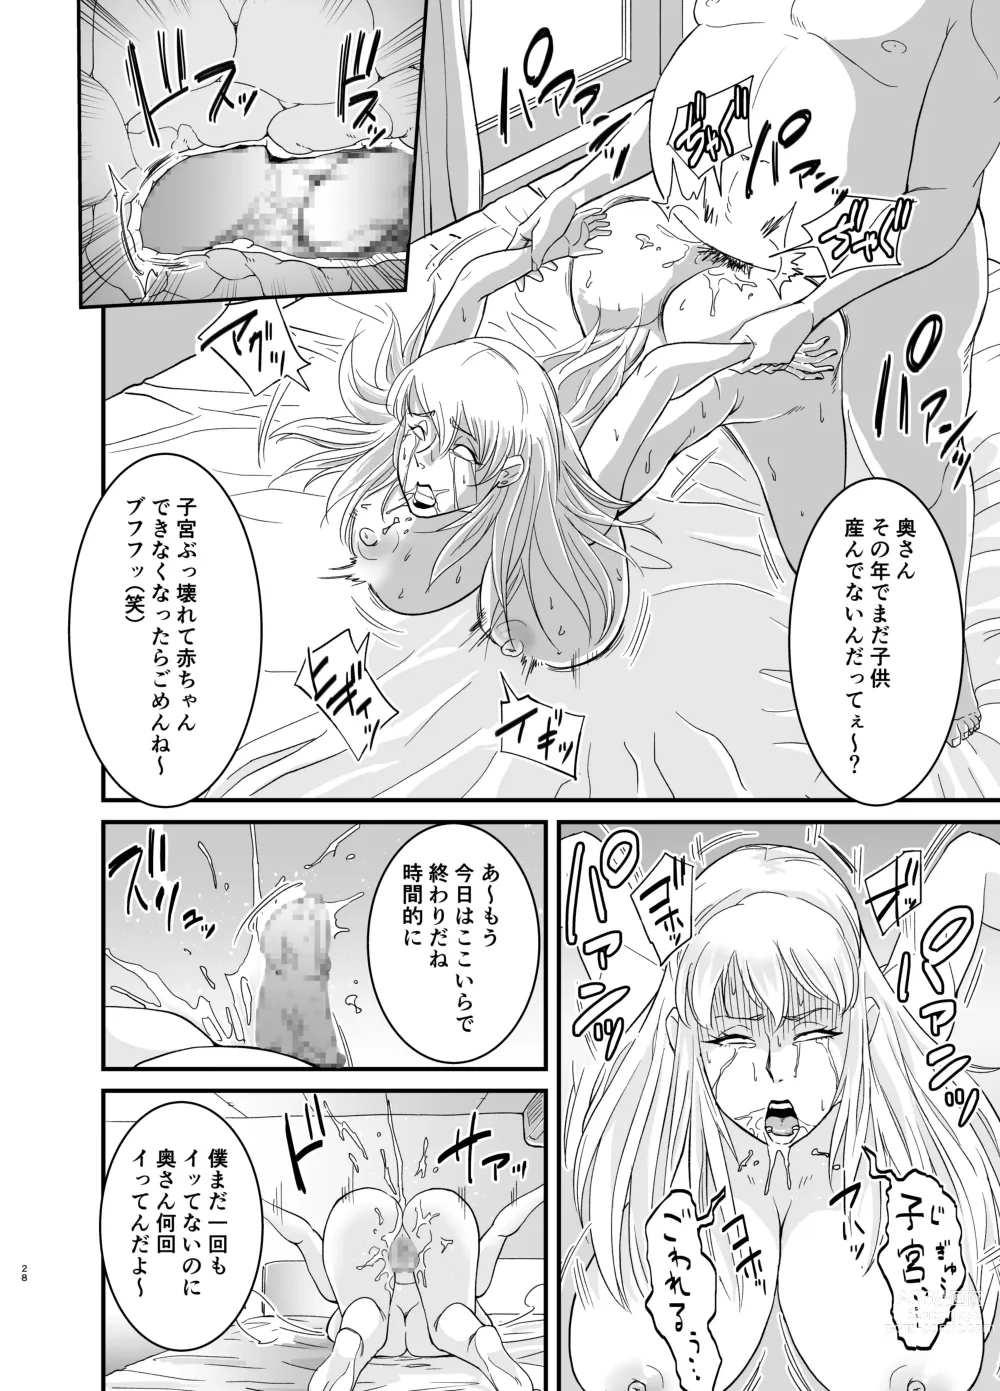 Page 29 of doujinshi Marina to Buta